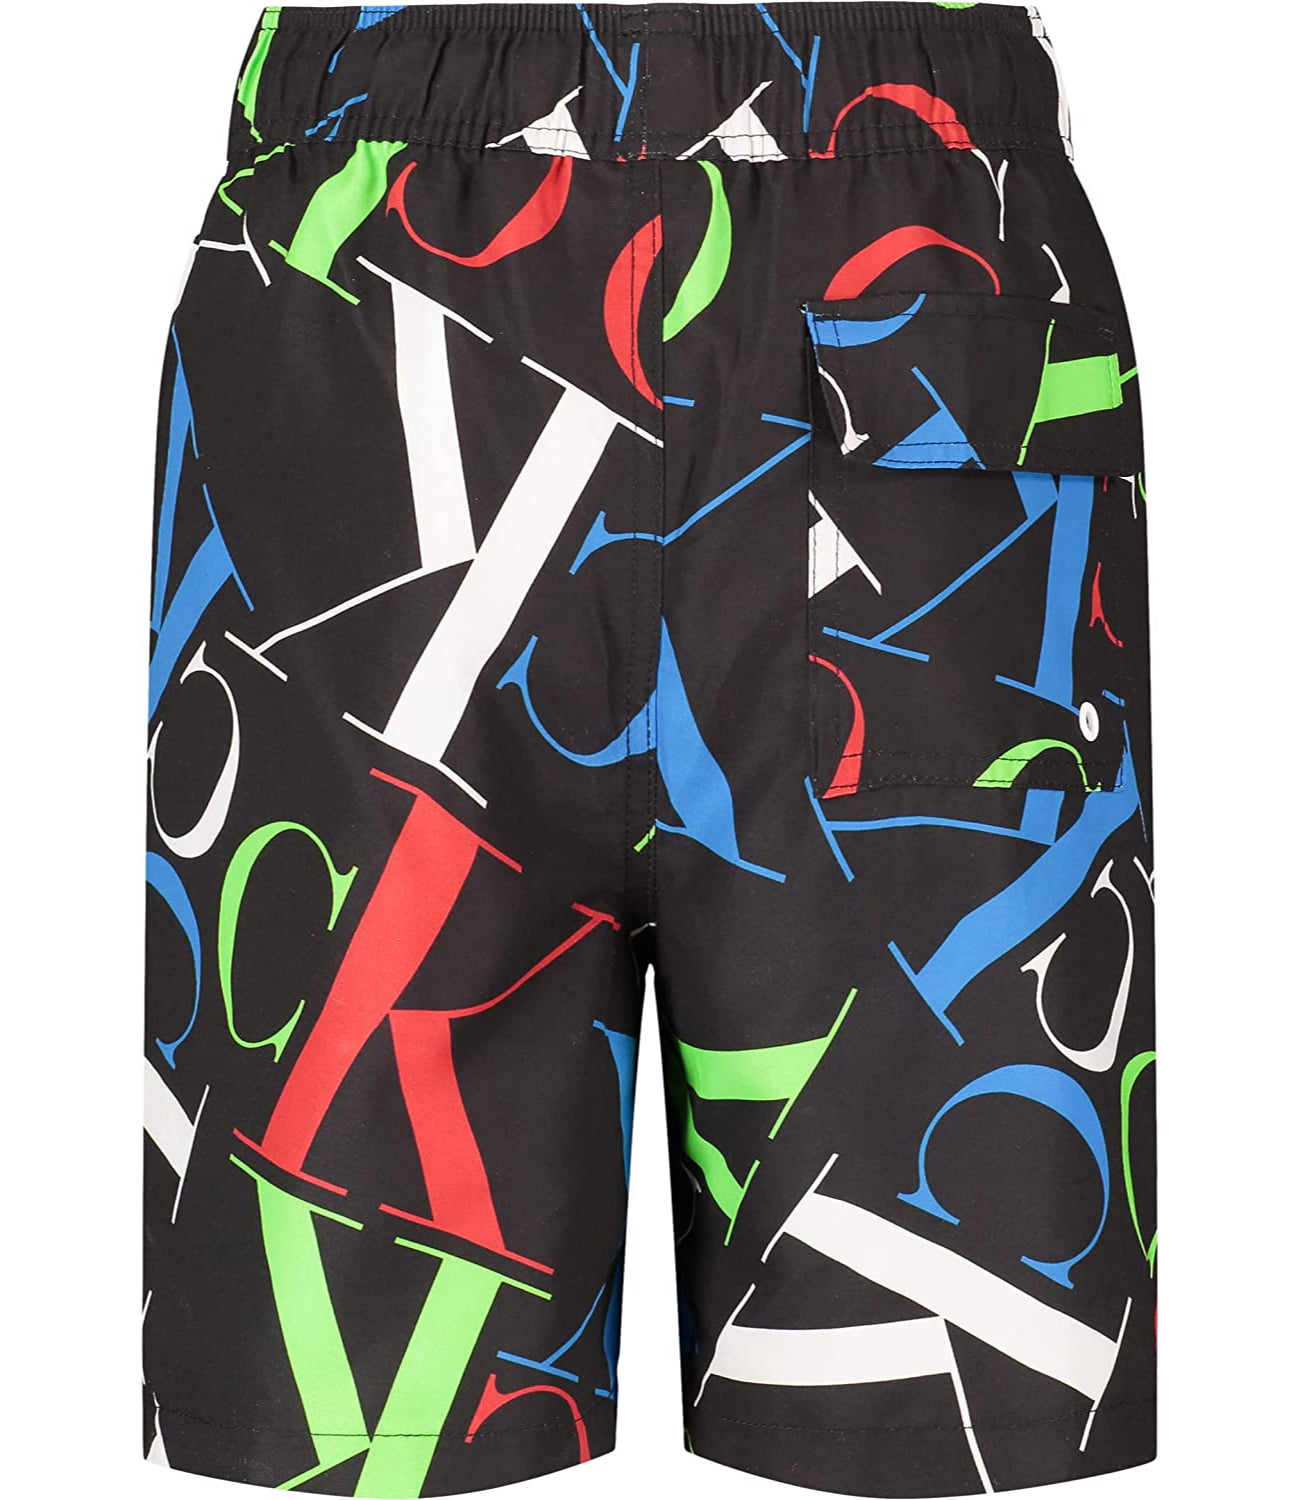 Calvin Klein Boys 8-20 Printed Swim Shorts with UPF 50+ Sun Protection